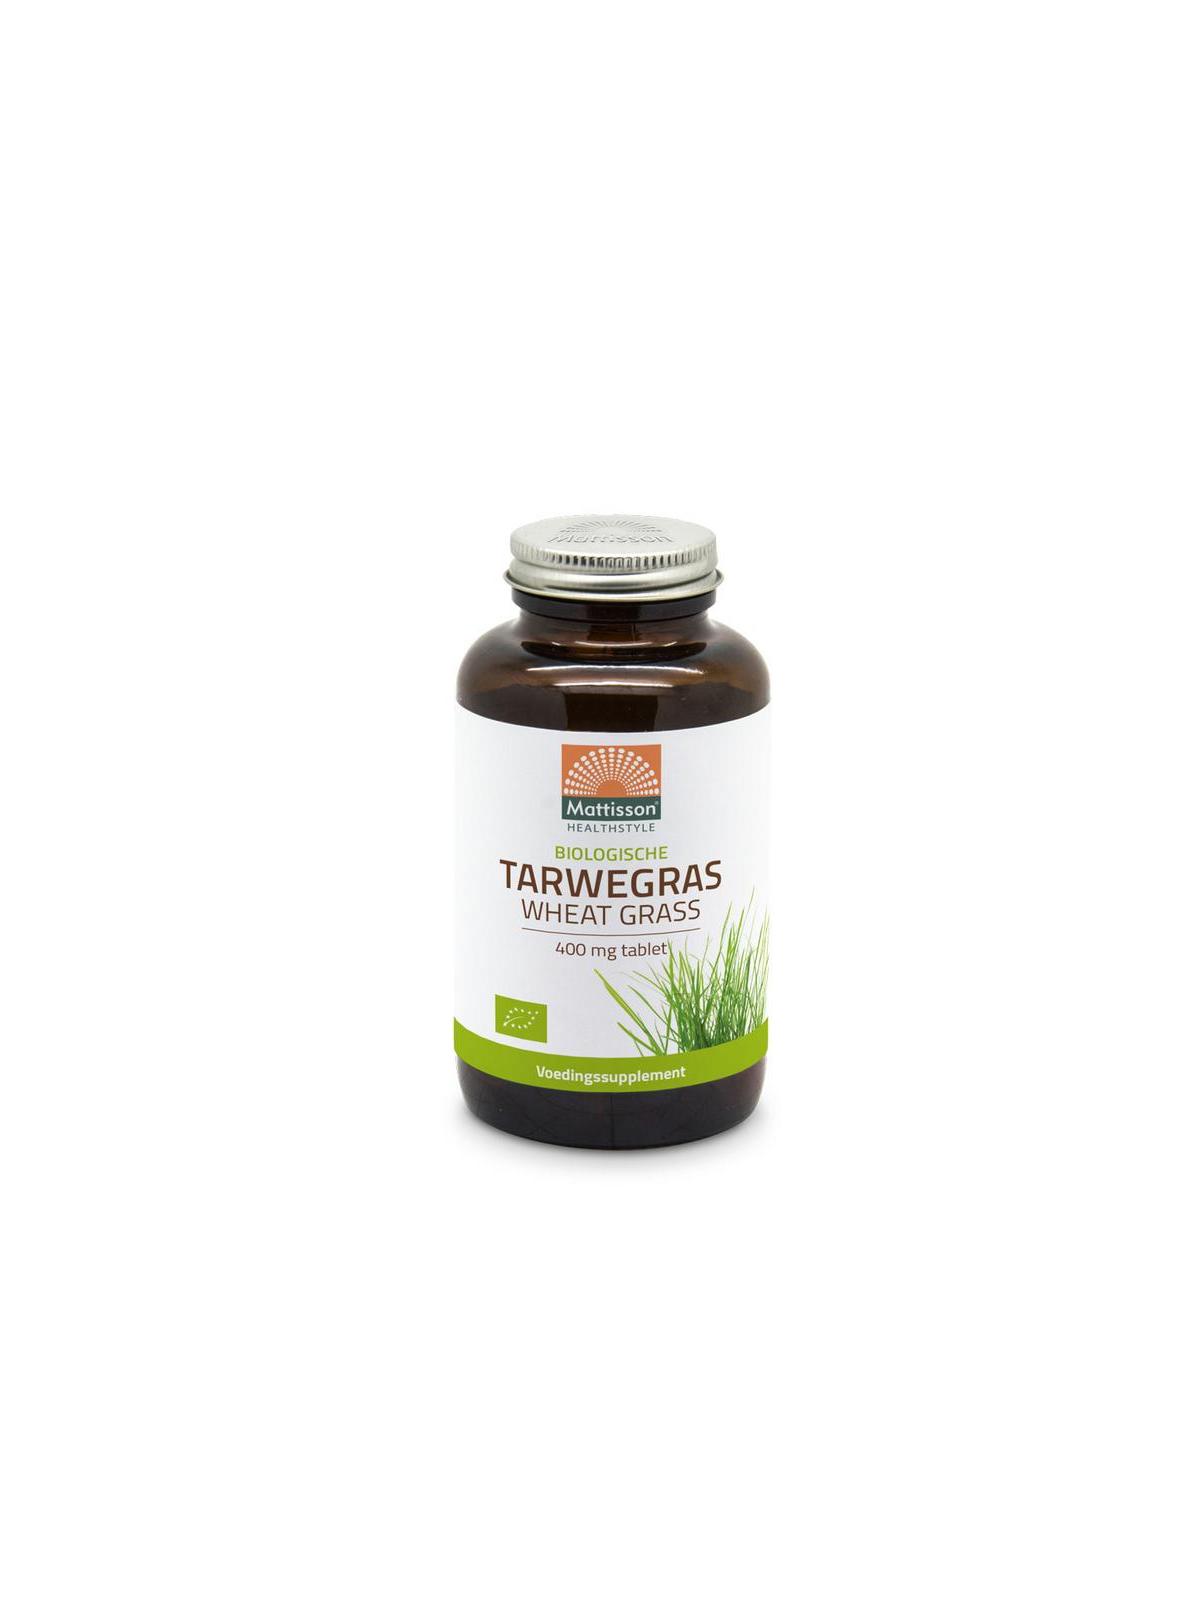 Bio tarwegras wheatgrass tabletten raw 400 mg bio